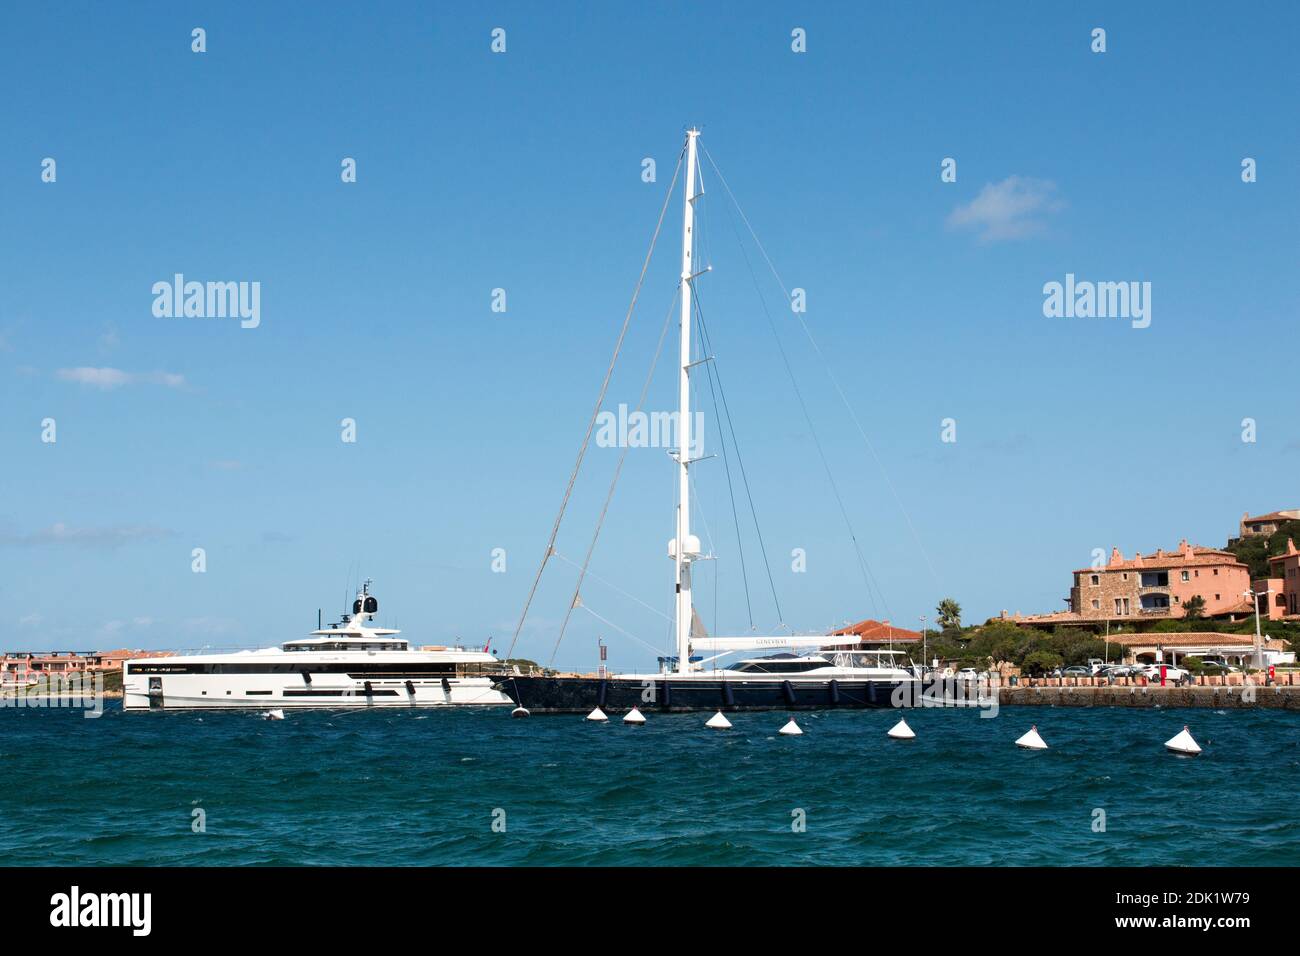 Hafen von Porto Cervo, Sardinien, Italien, Mittelmeer, Yachten, Klippen Foto de stock